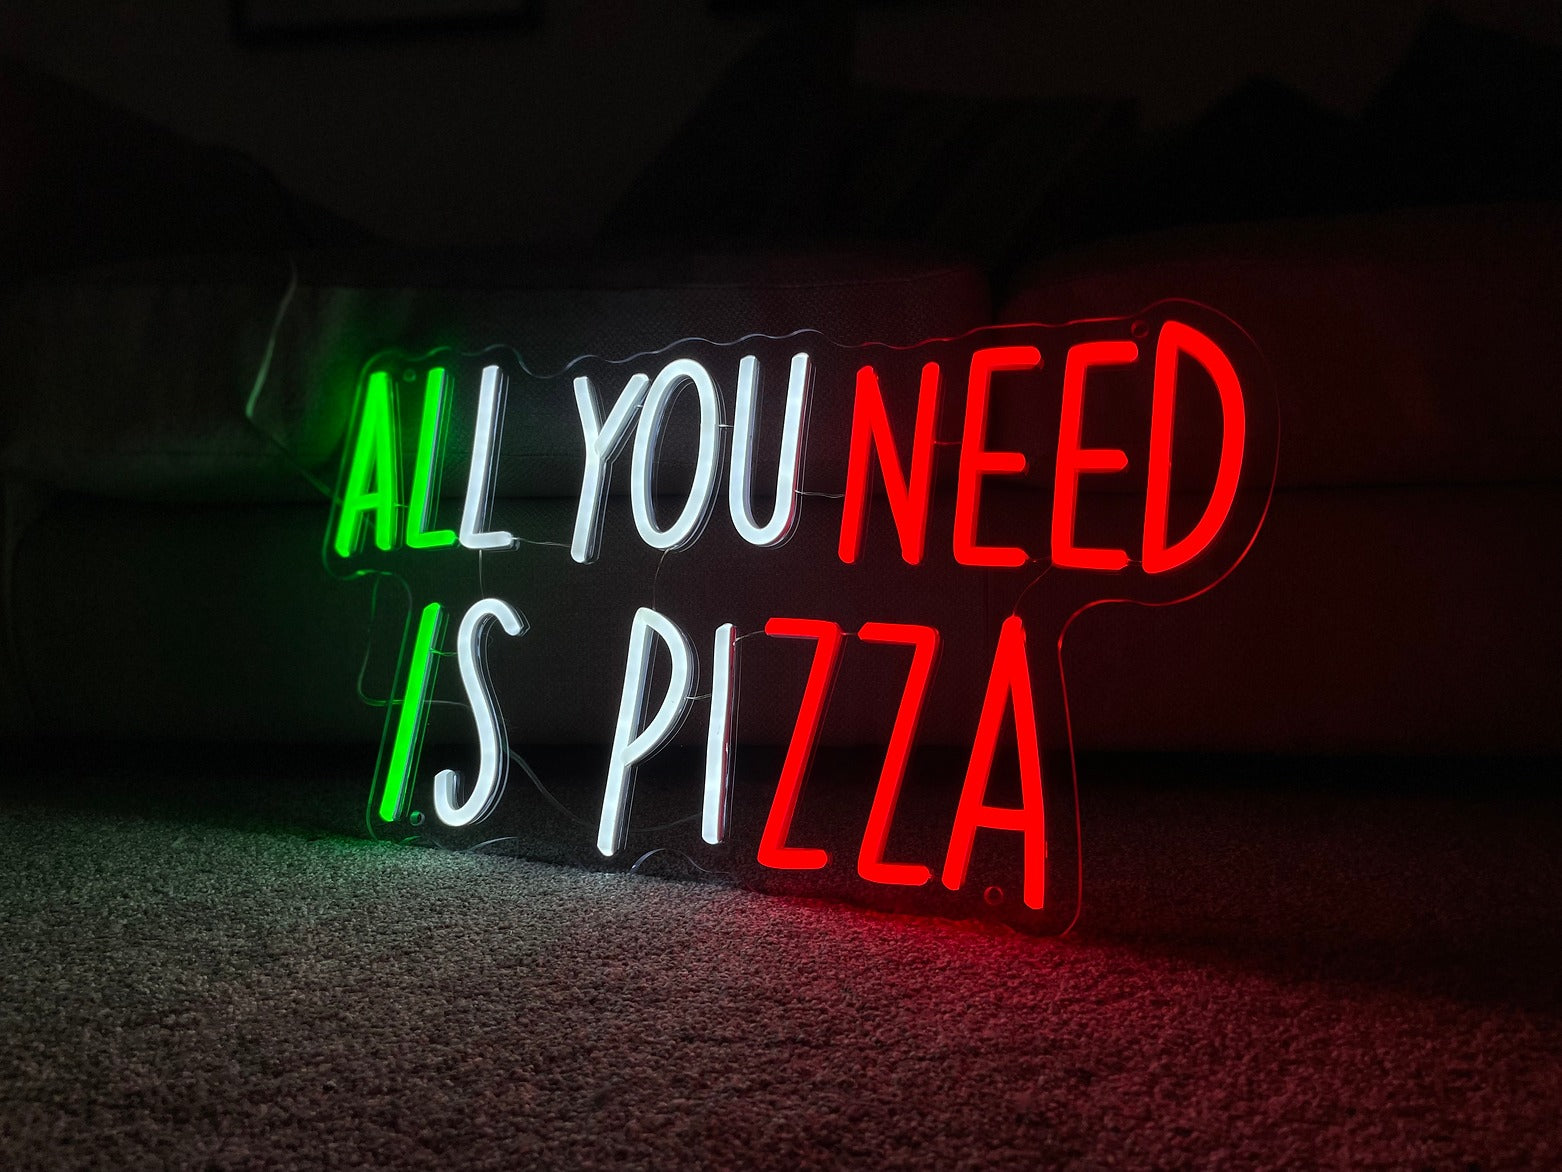  Pizza neon light for a joyful touch